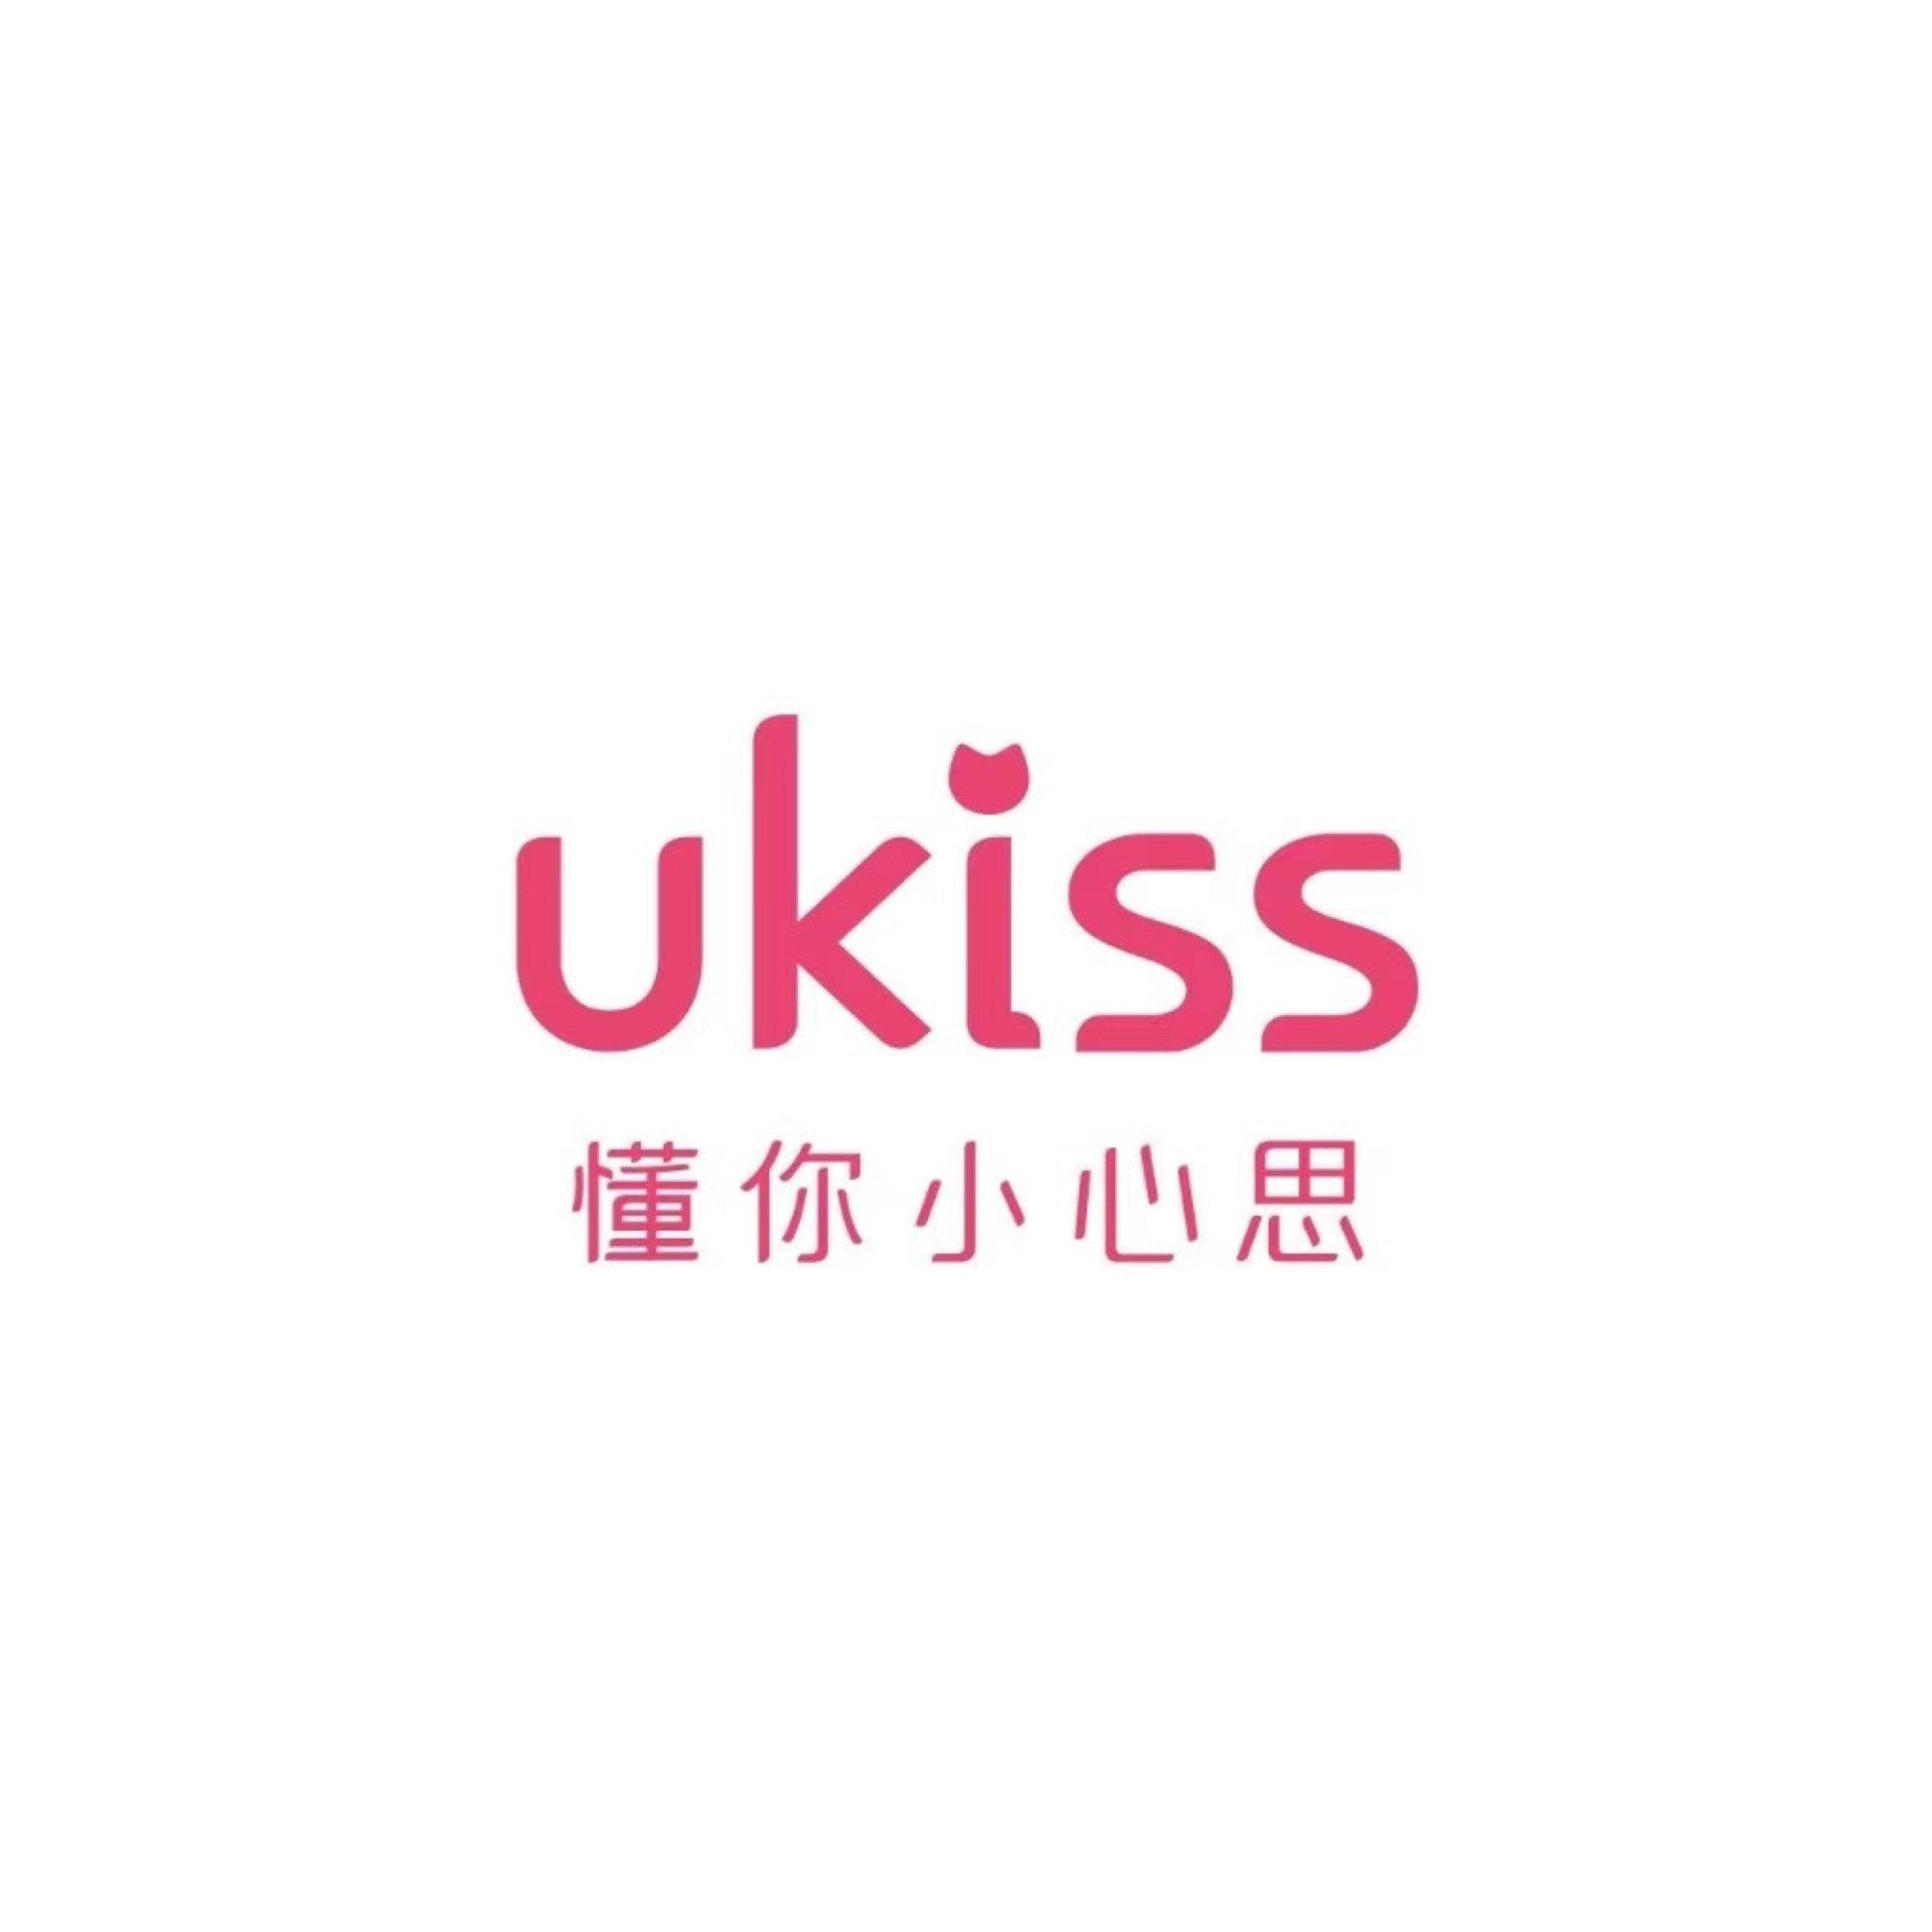 UKISS | 悠珂思 - Chic Decent